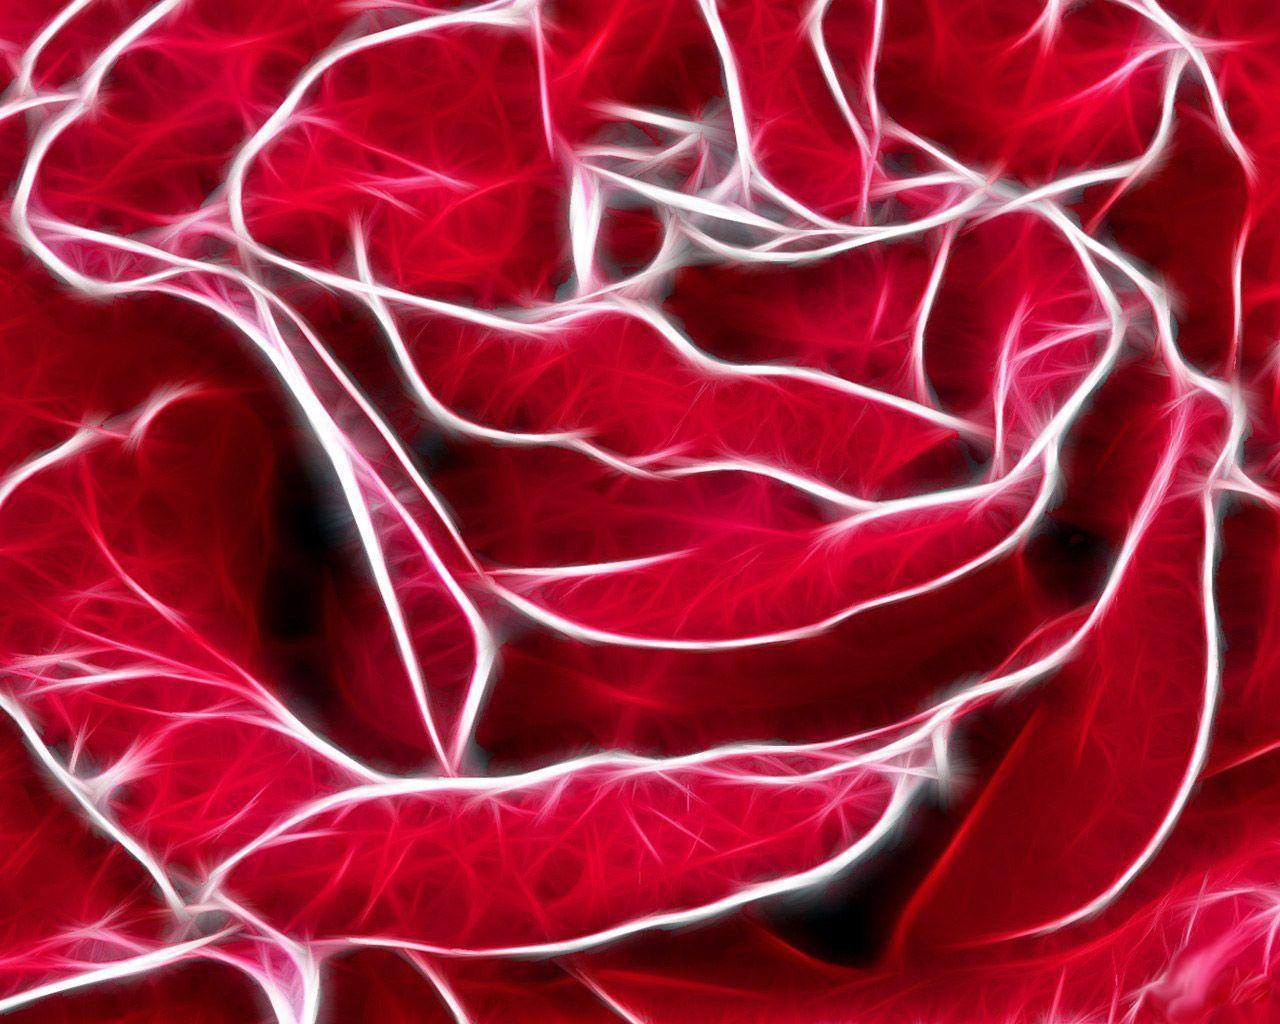 Desktop Wallpaper · Gallery · Windows 7 · Red rose